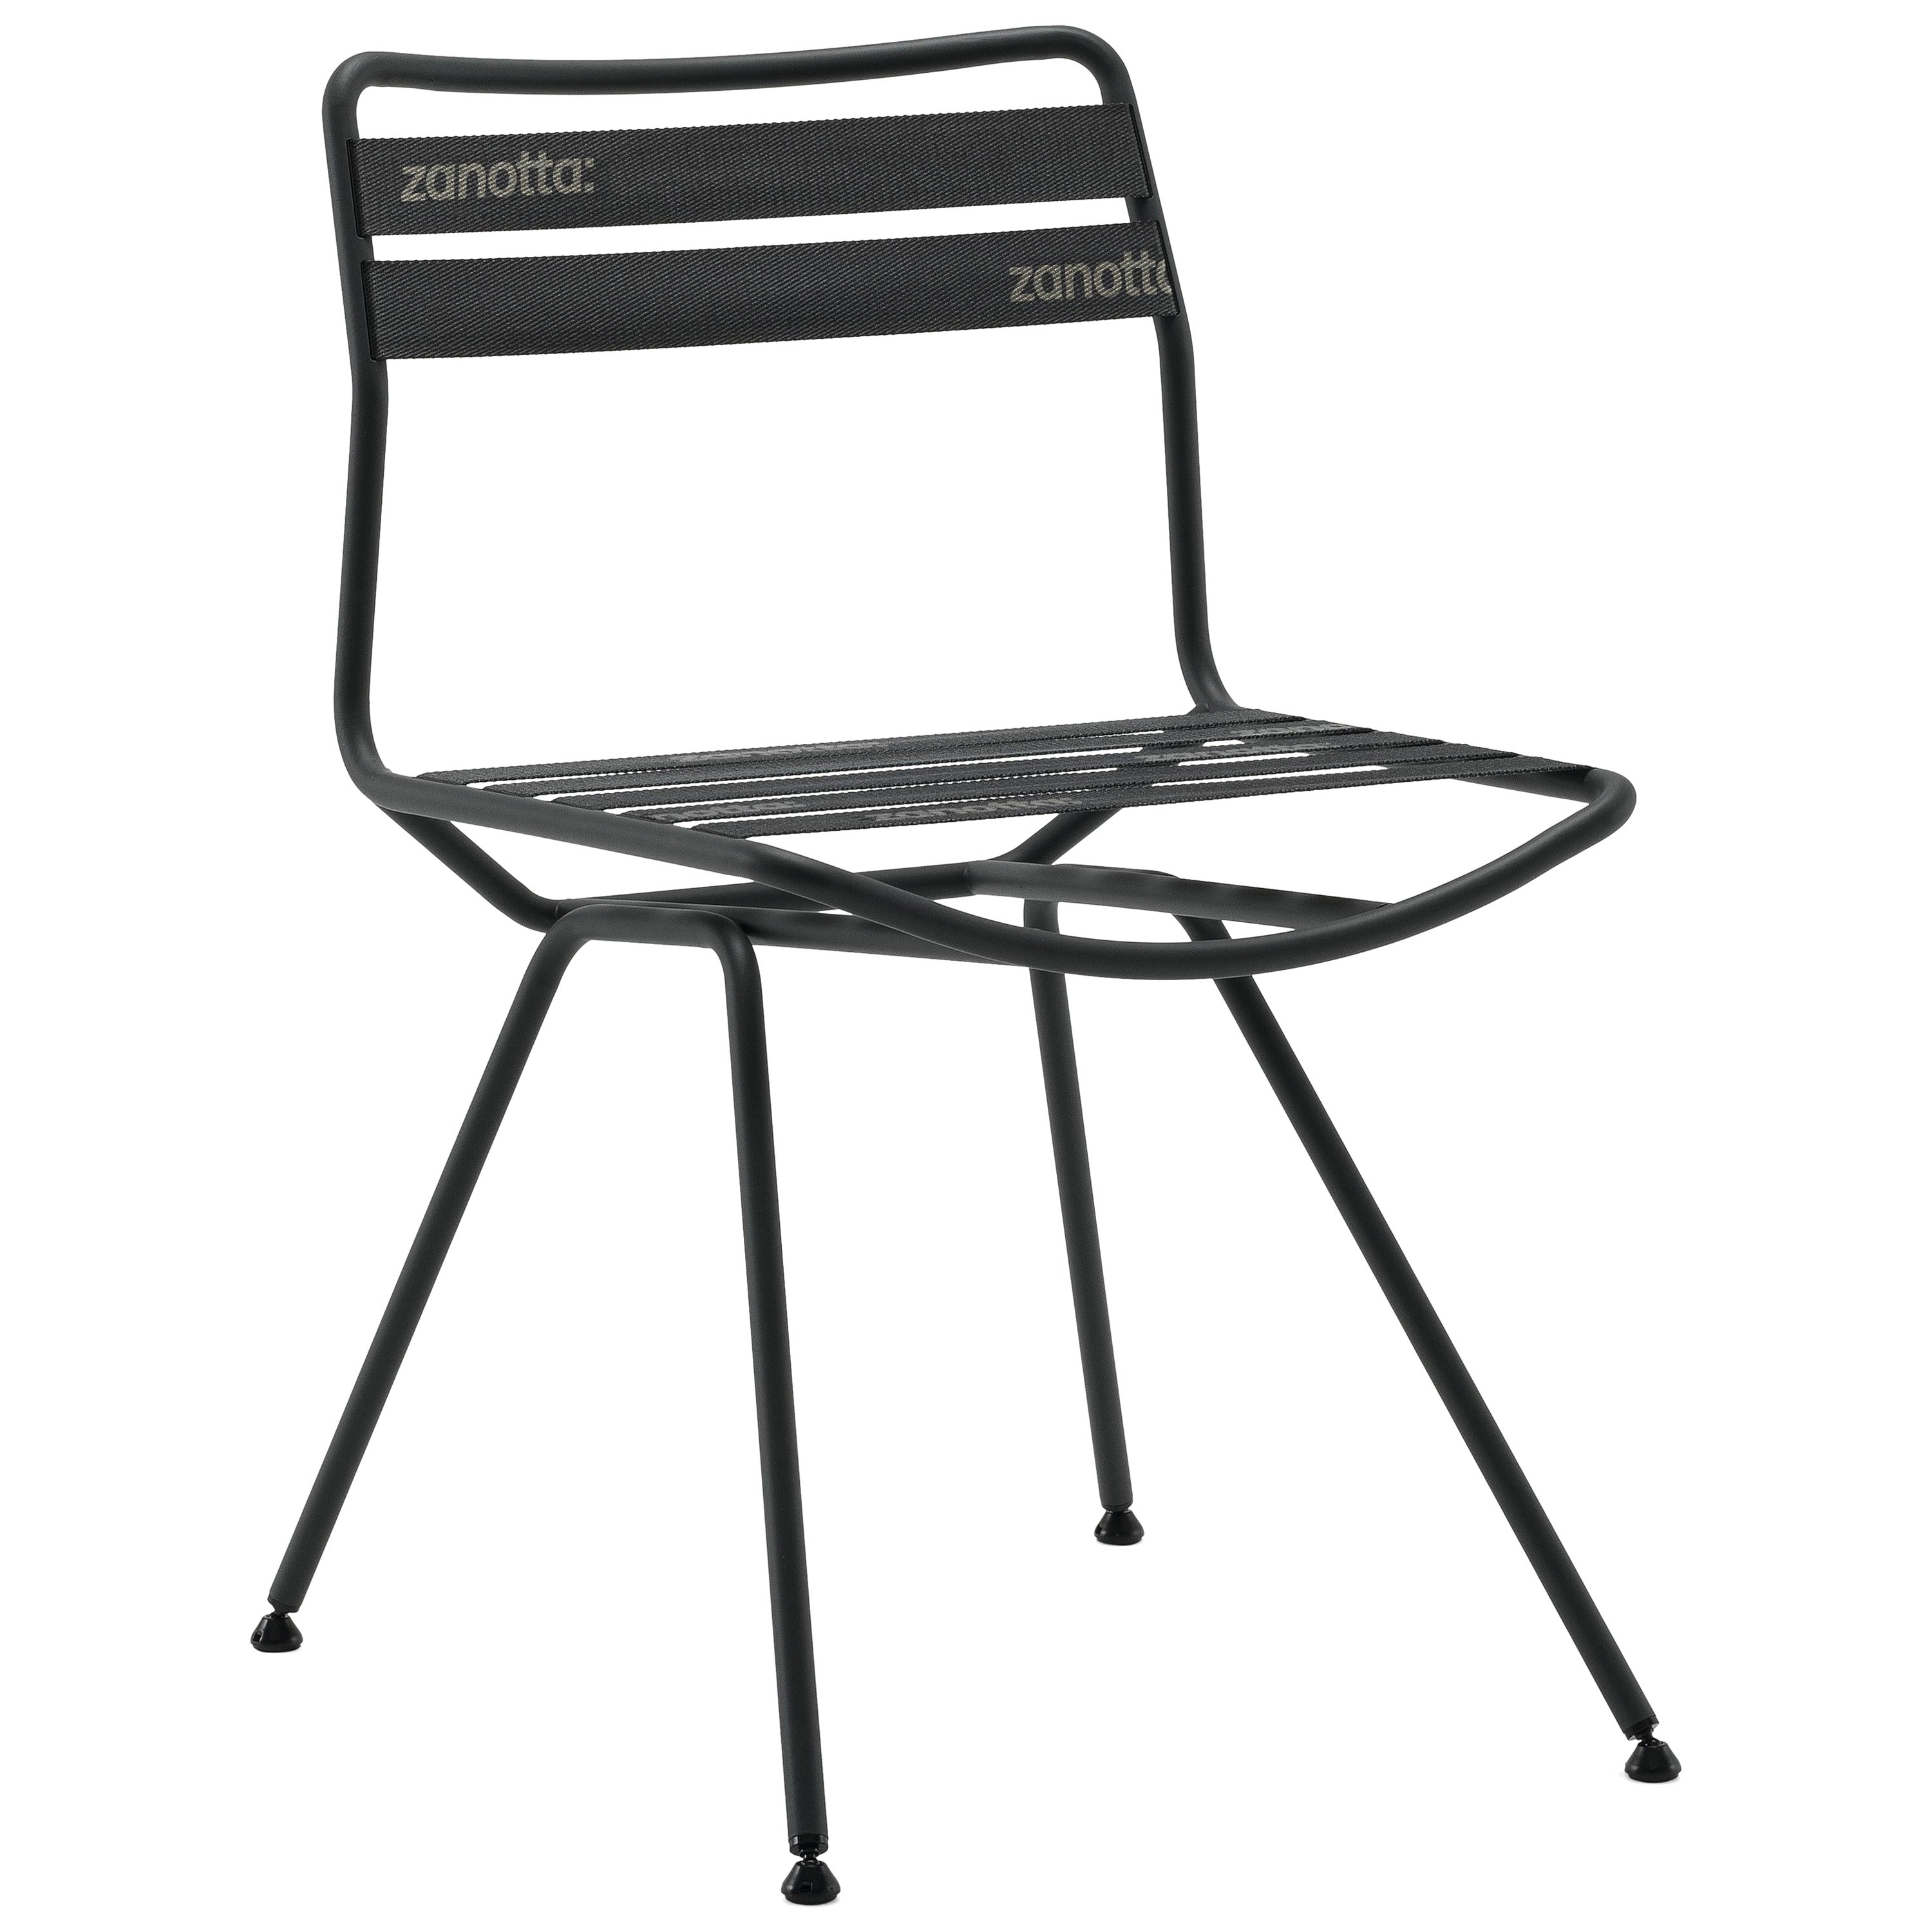 Zanotta Dan Chair in Anthracite Elastic Seat & Back with Matt Black Steel Frame For Sale